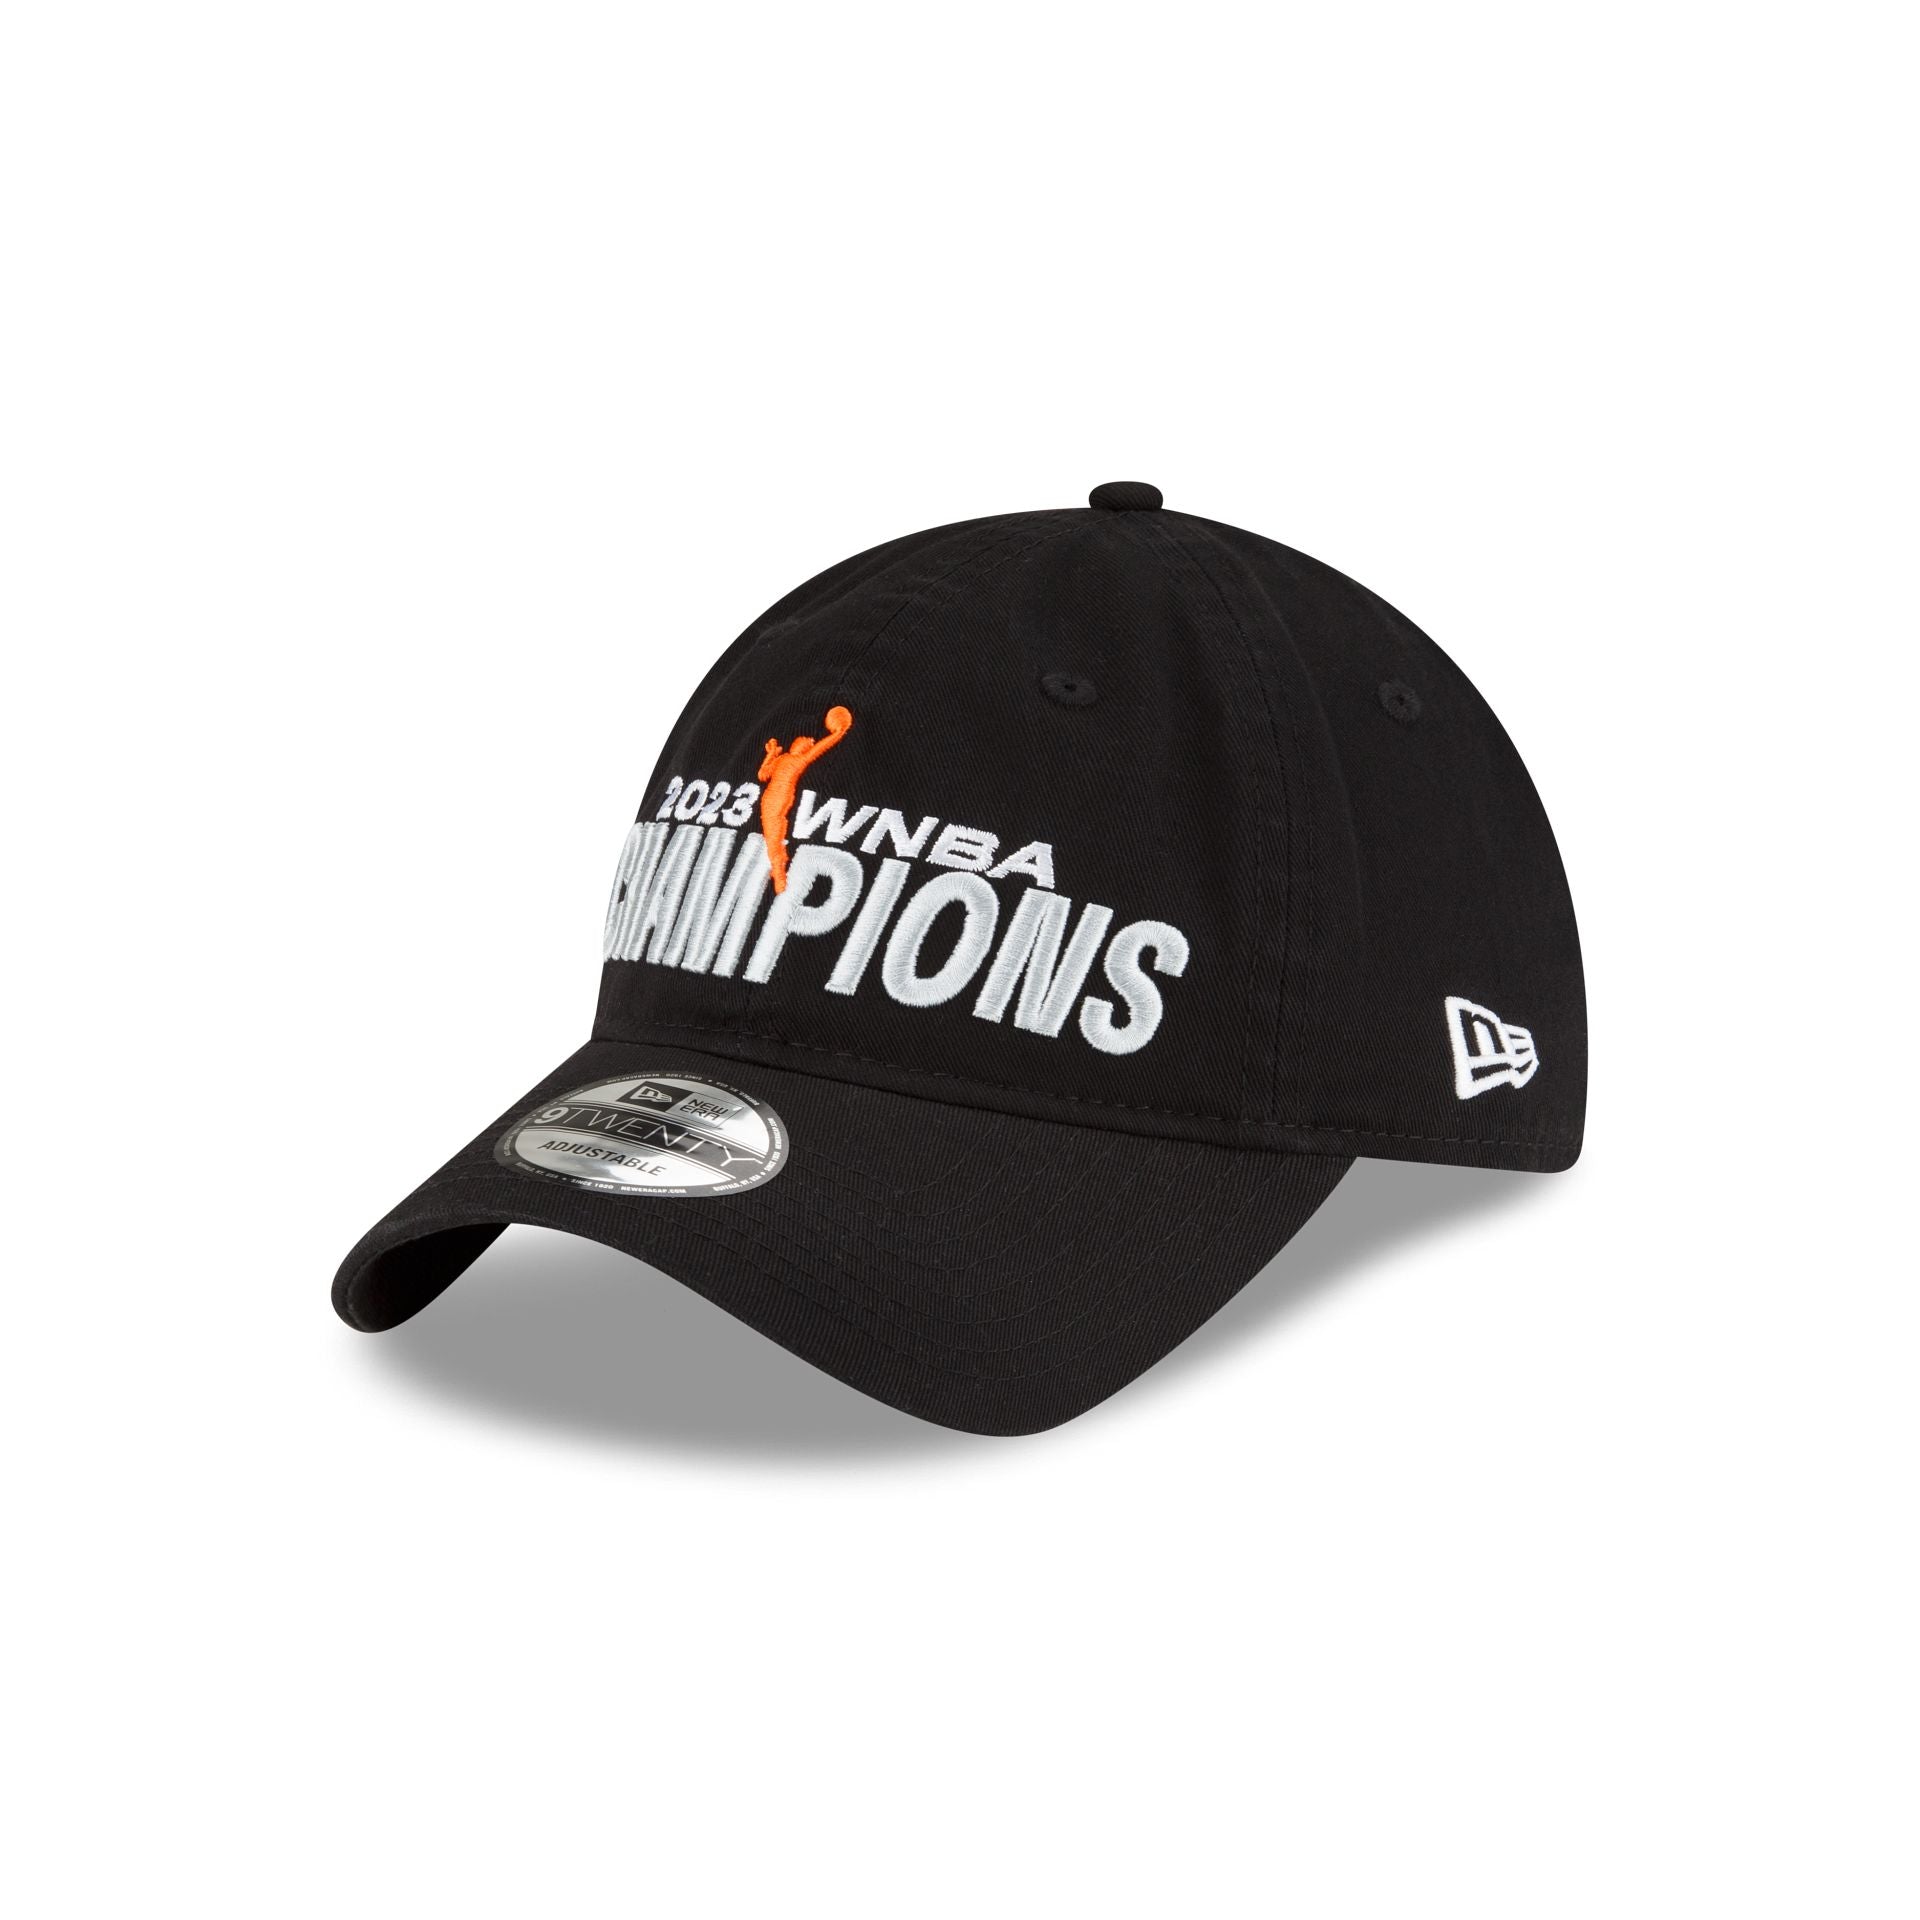 lv aces champions hat